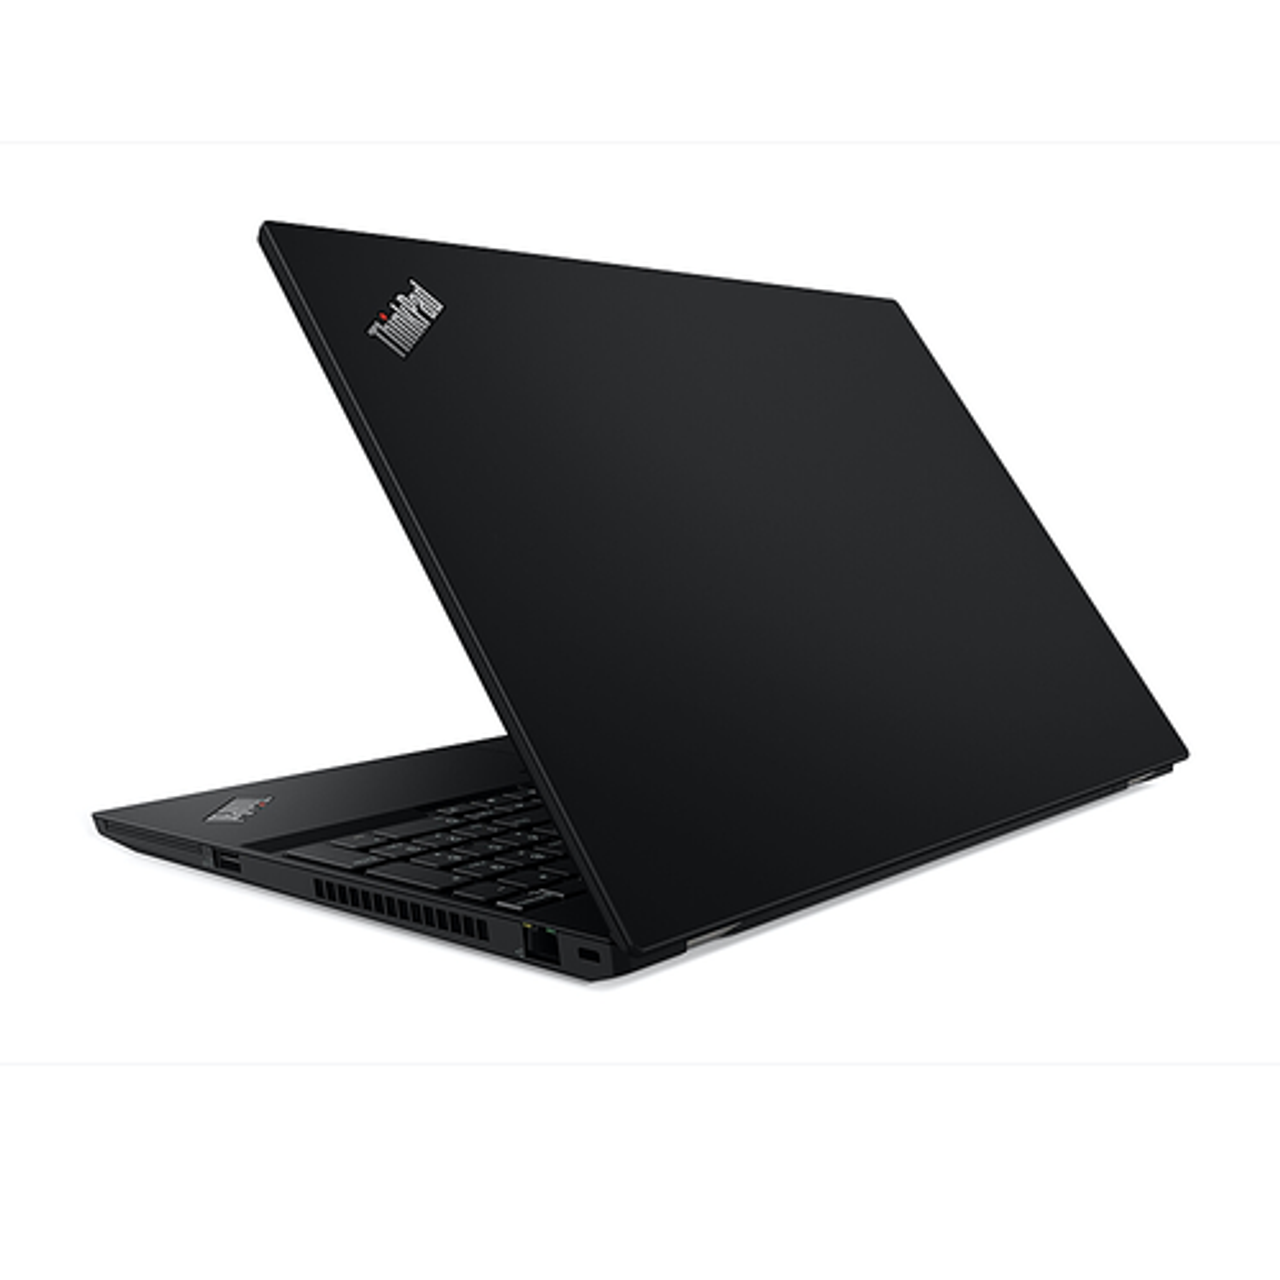 Lenovo Thinkpad T490 Laptop Intel Core i5-8365U 1.6GHZ 8GB 256GB SSD Windows 10 Pro - Refurbished - Black